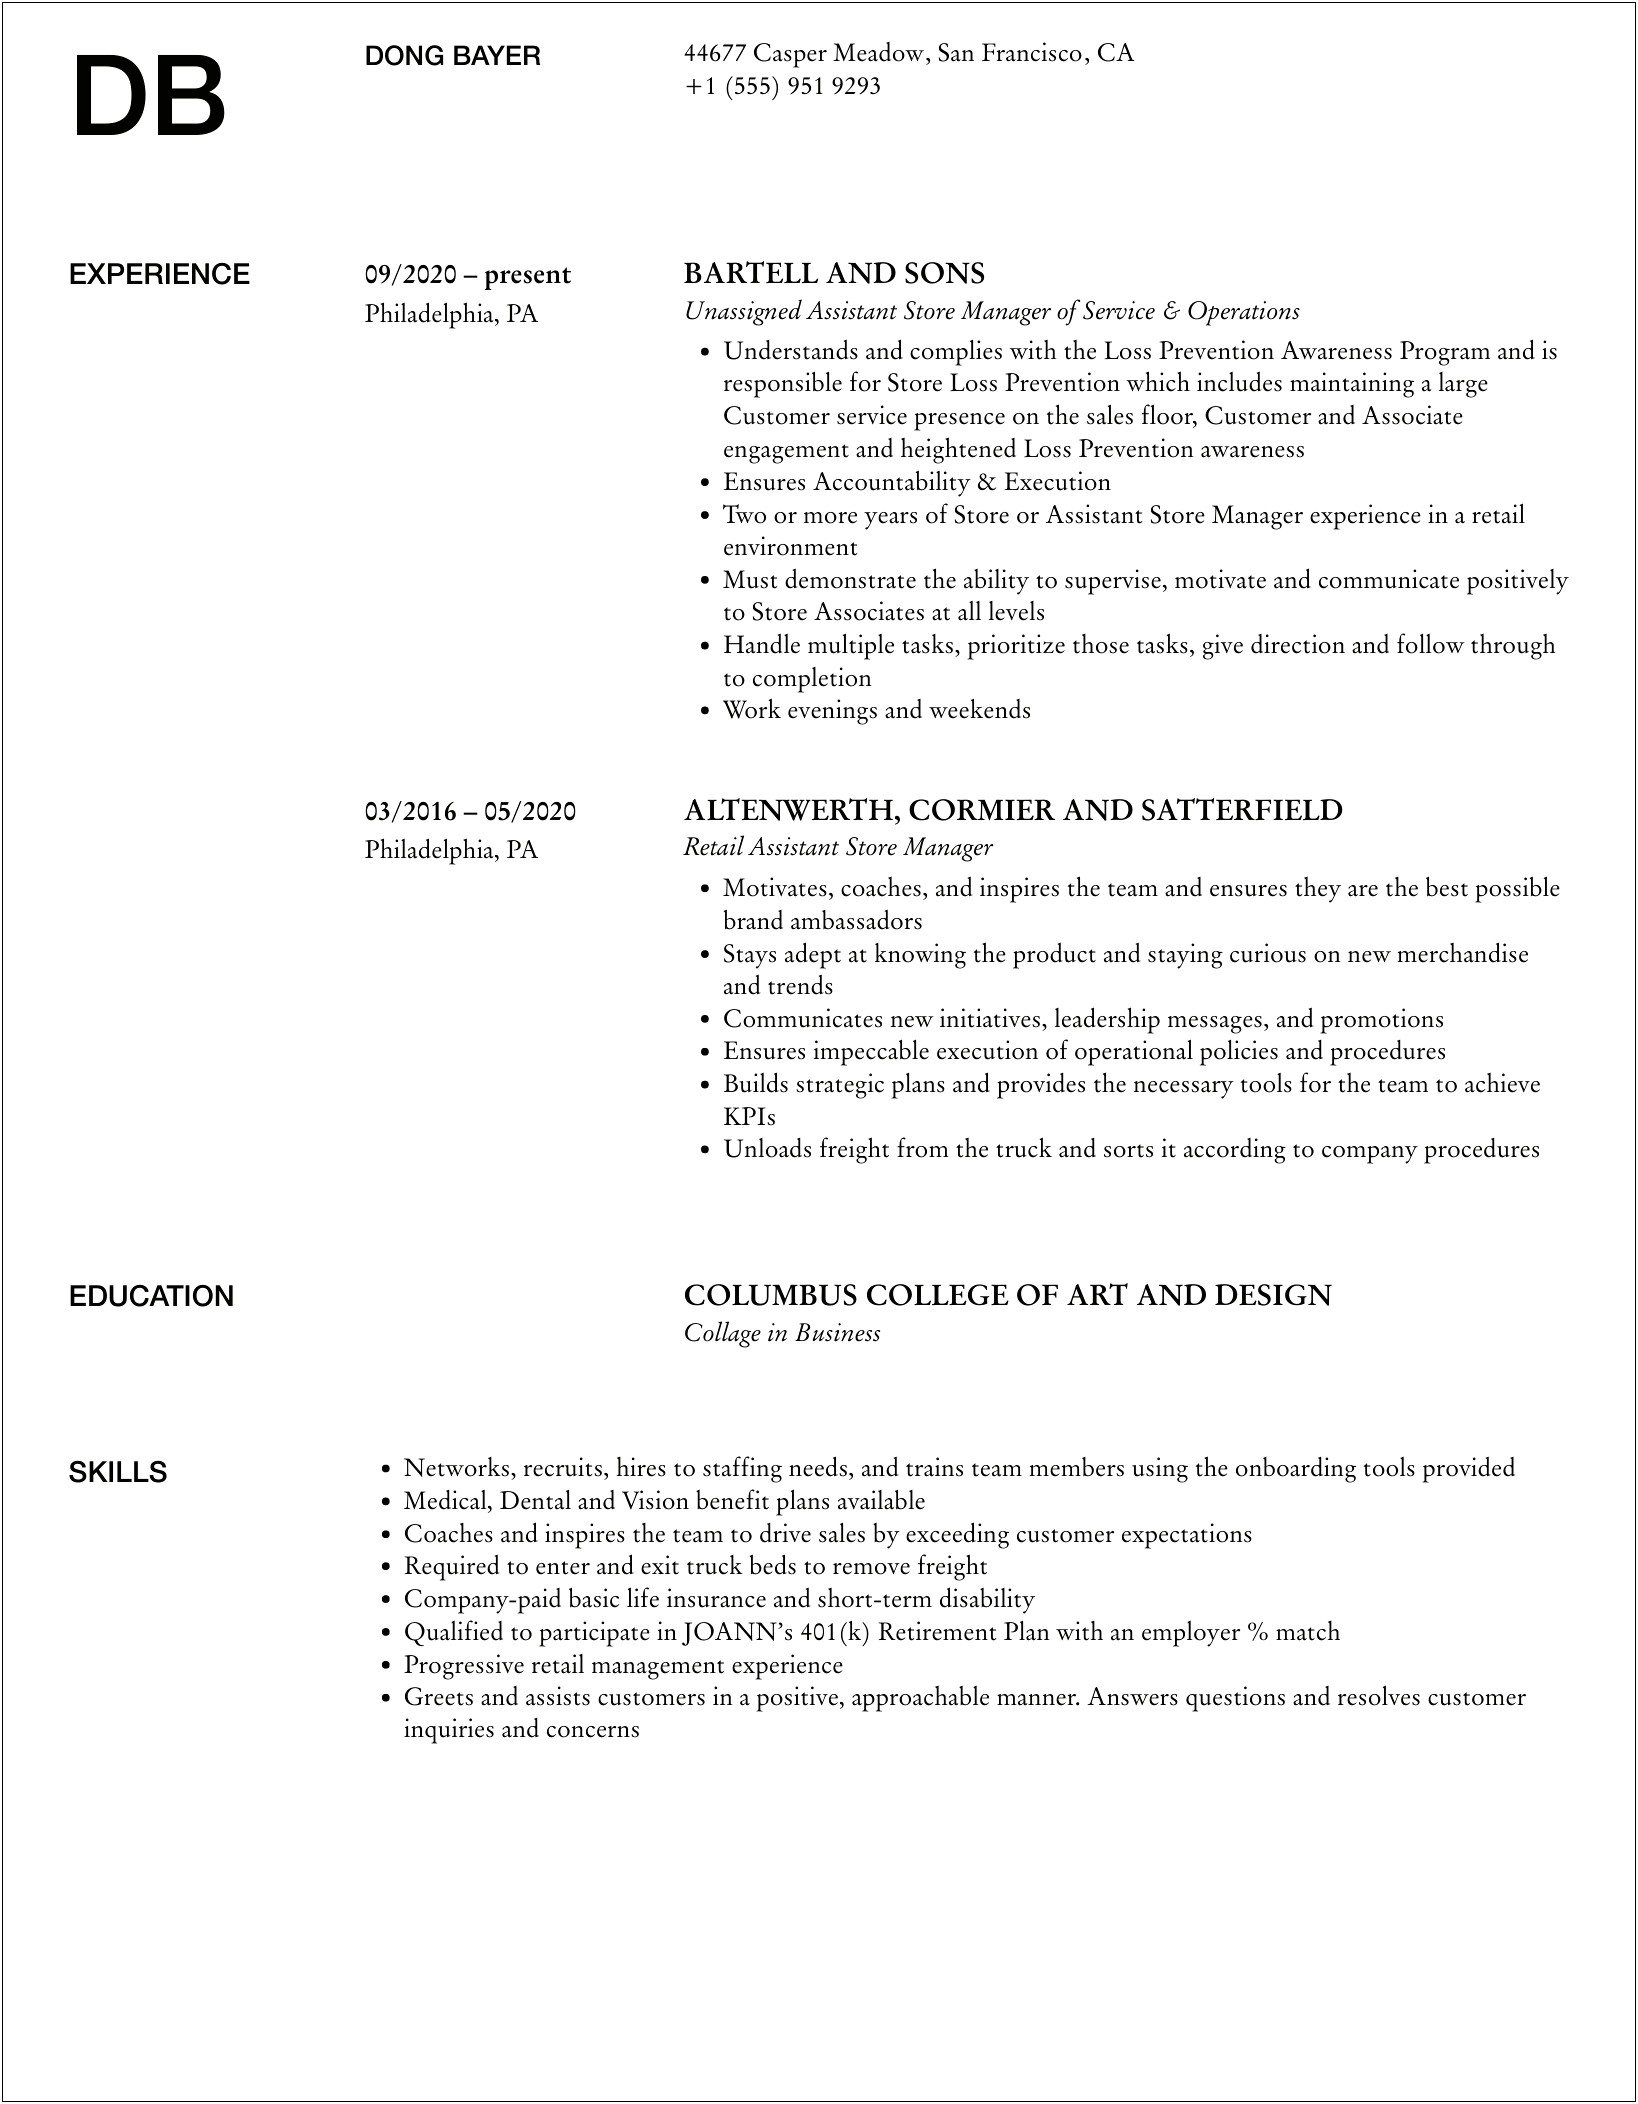 Family Dollar Assistant Store Manager Job Description Resume